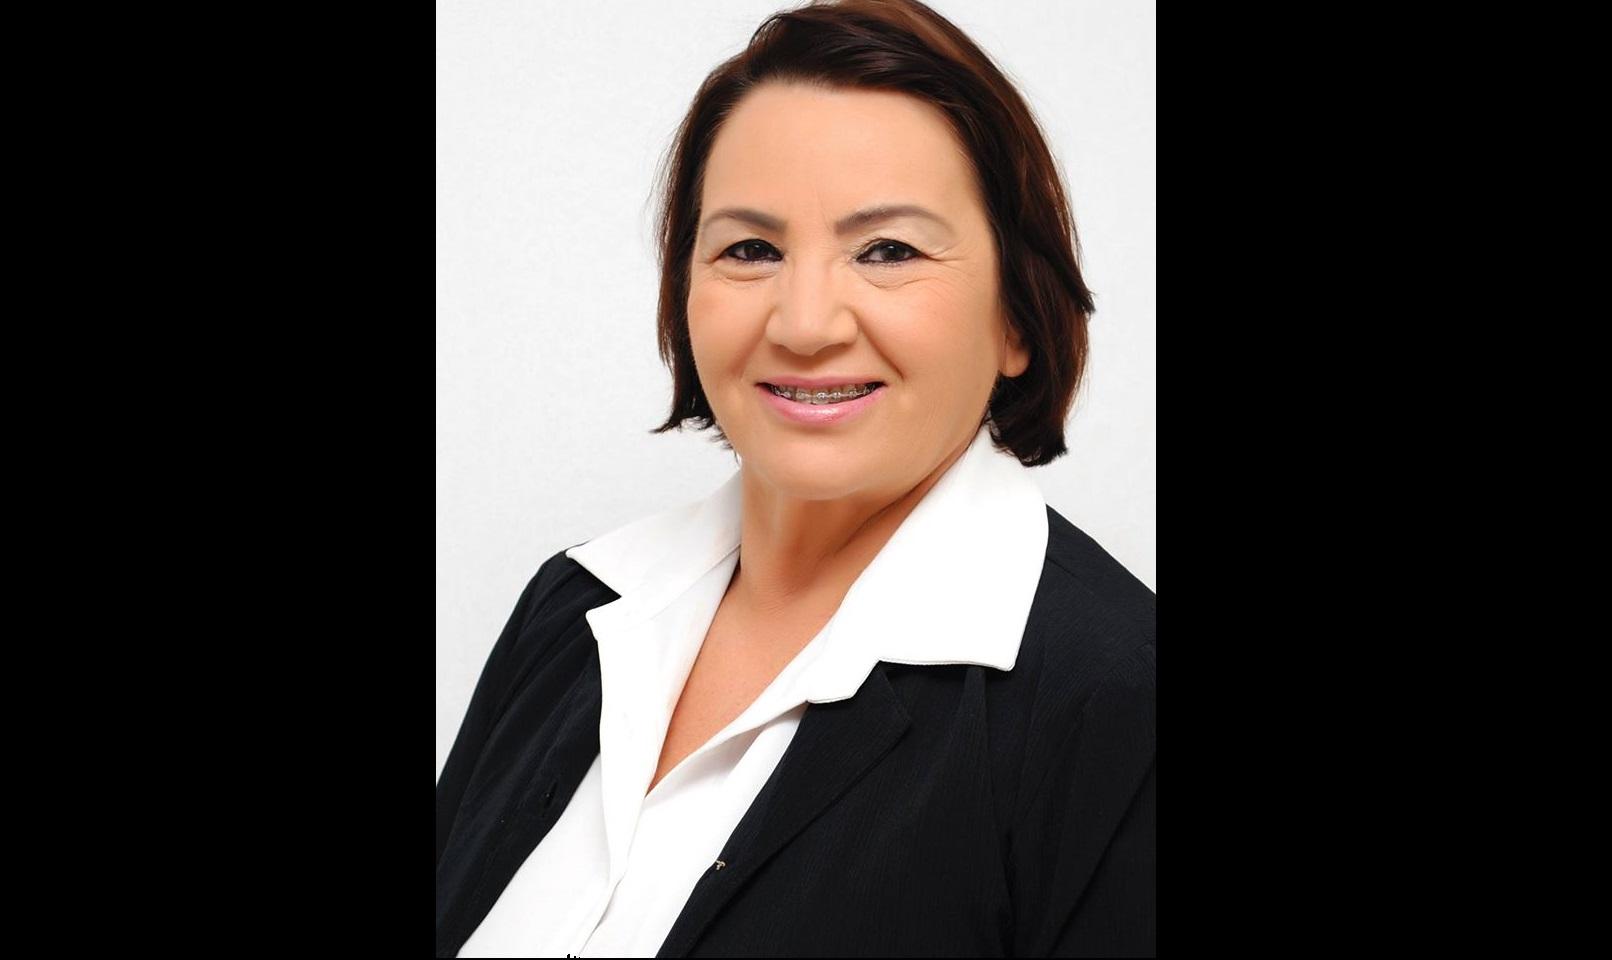 Profª. Otani Maria Noleto é eleita presidente da APAE de Guaraí e assume mandato a partir de 2020